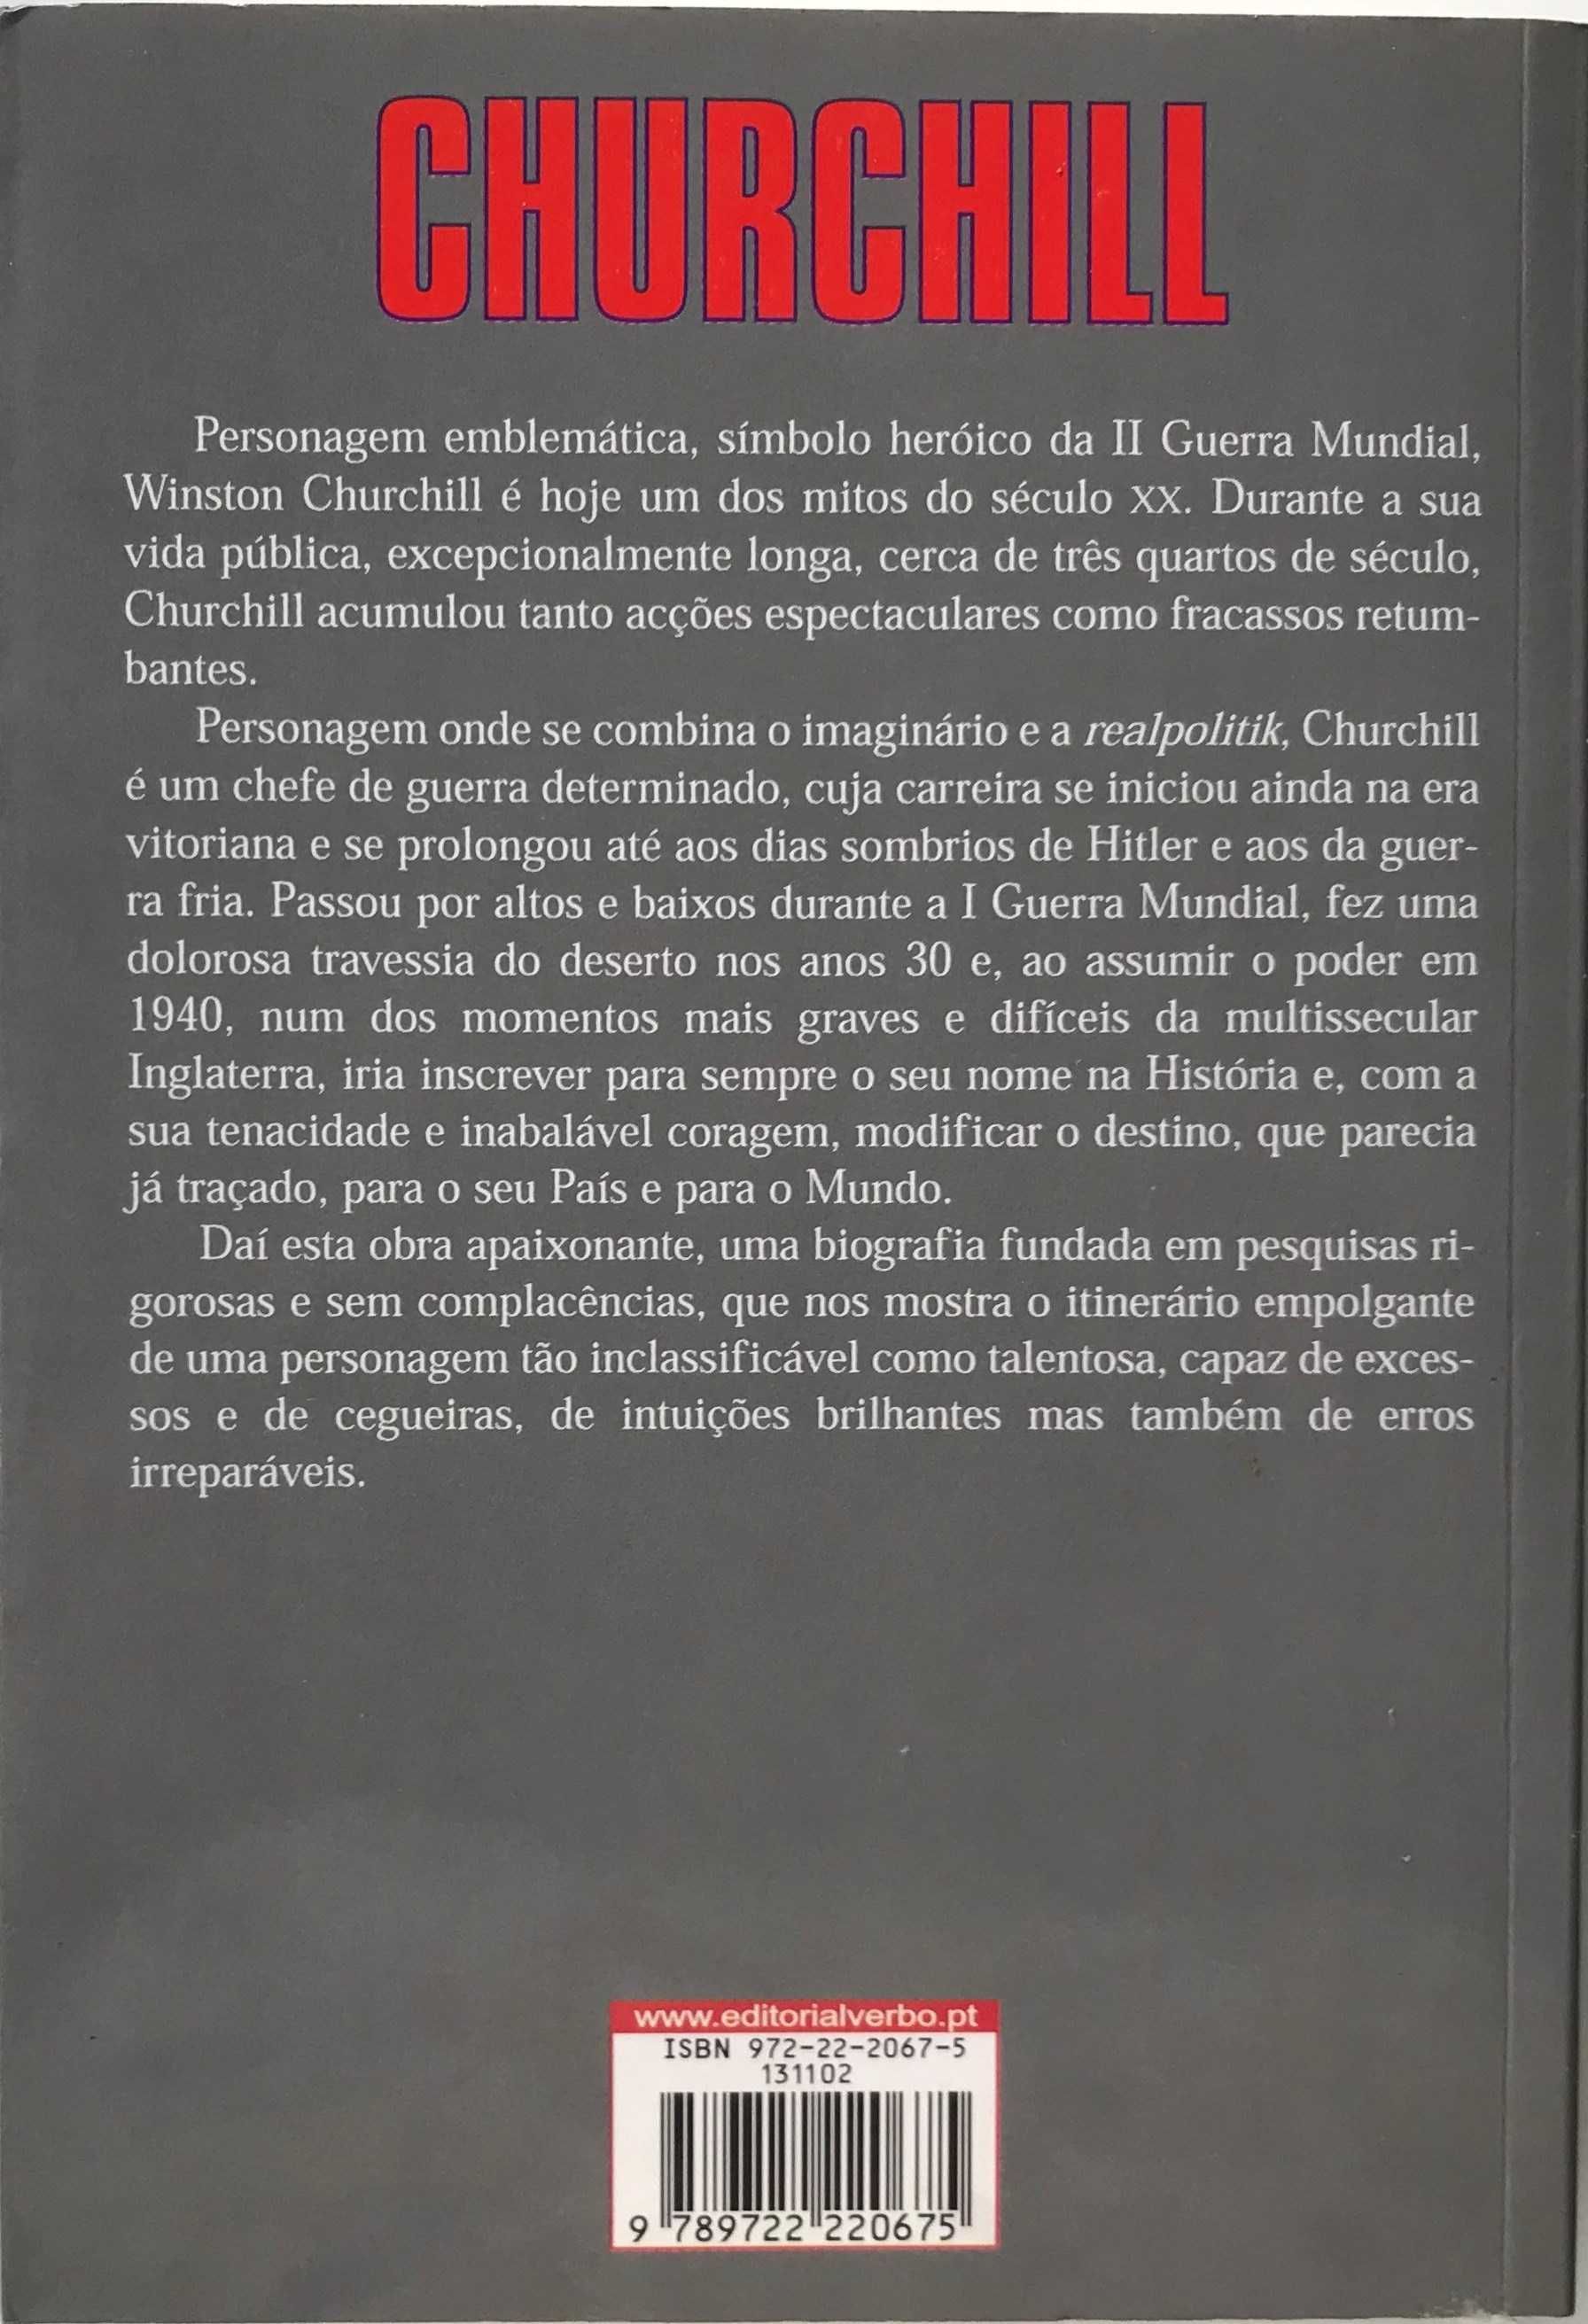 "Churchill" - Biografia por François Bédarida - Editora VERBO 2001